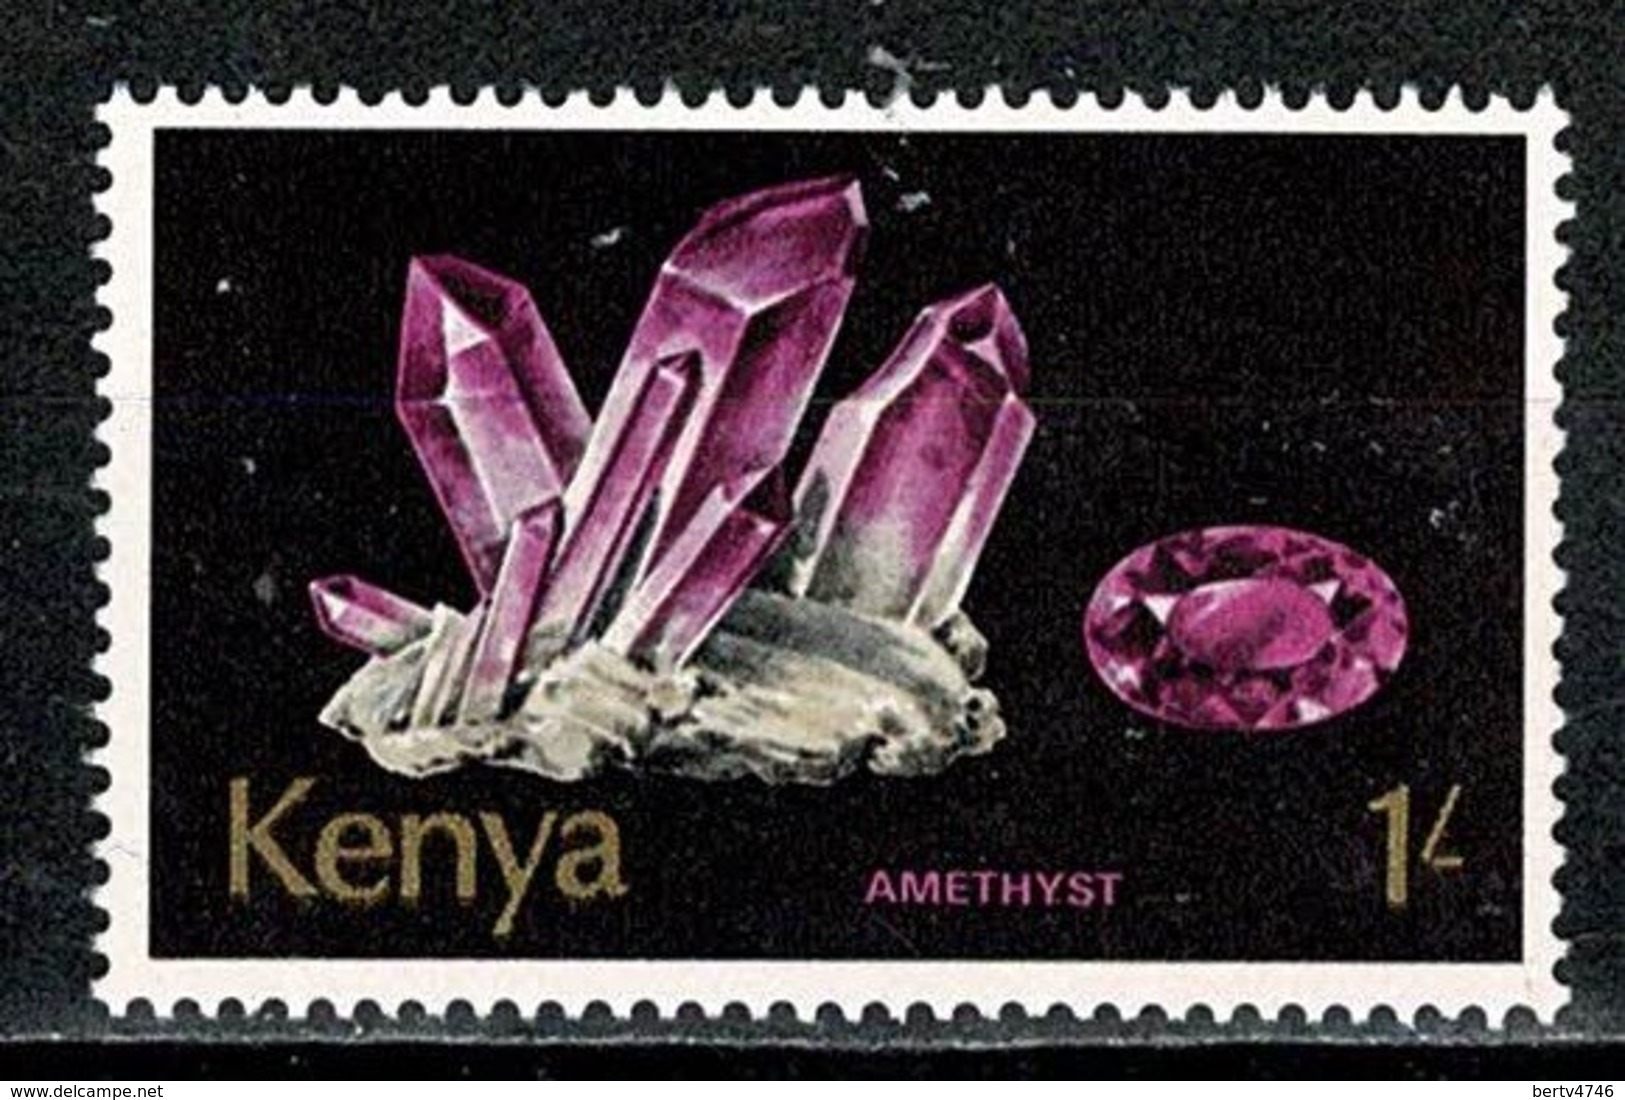 Kenya 1977   Yv 102**, Mi 103**, 1 Shilling  Minerals - Amethyst  MNH - Kenia (1963-...)